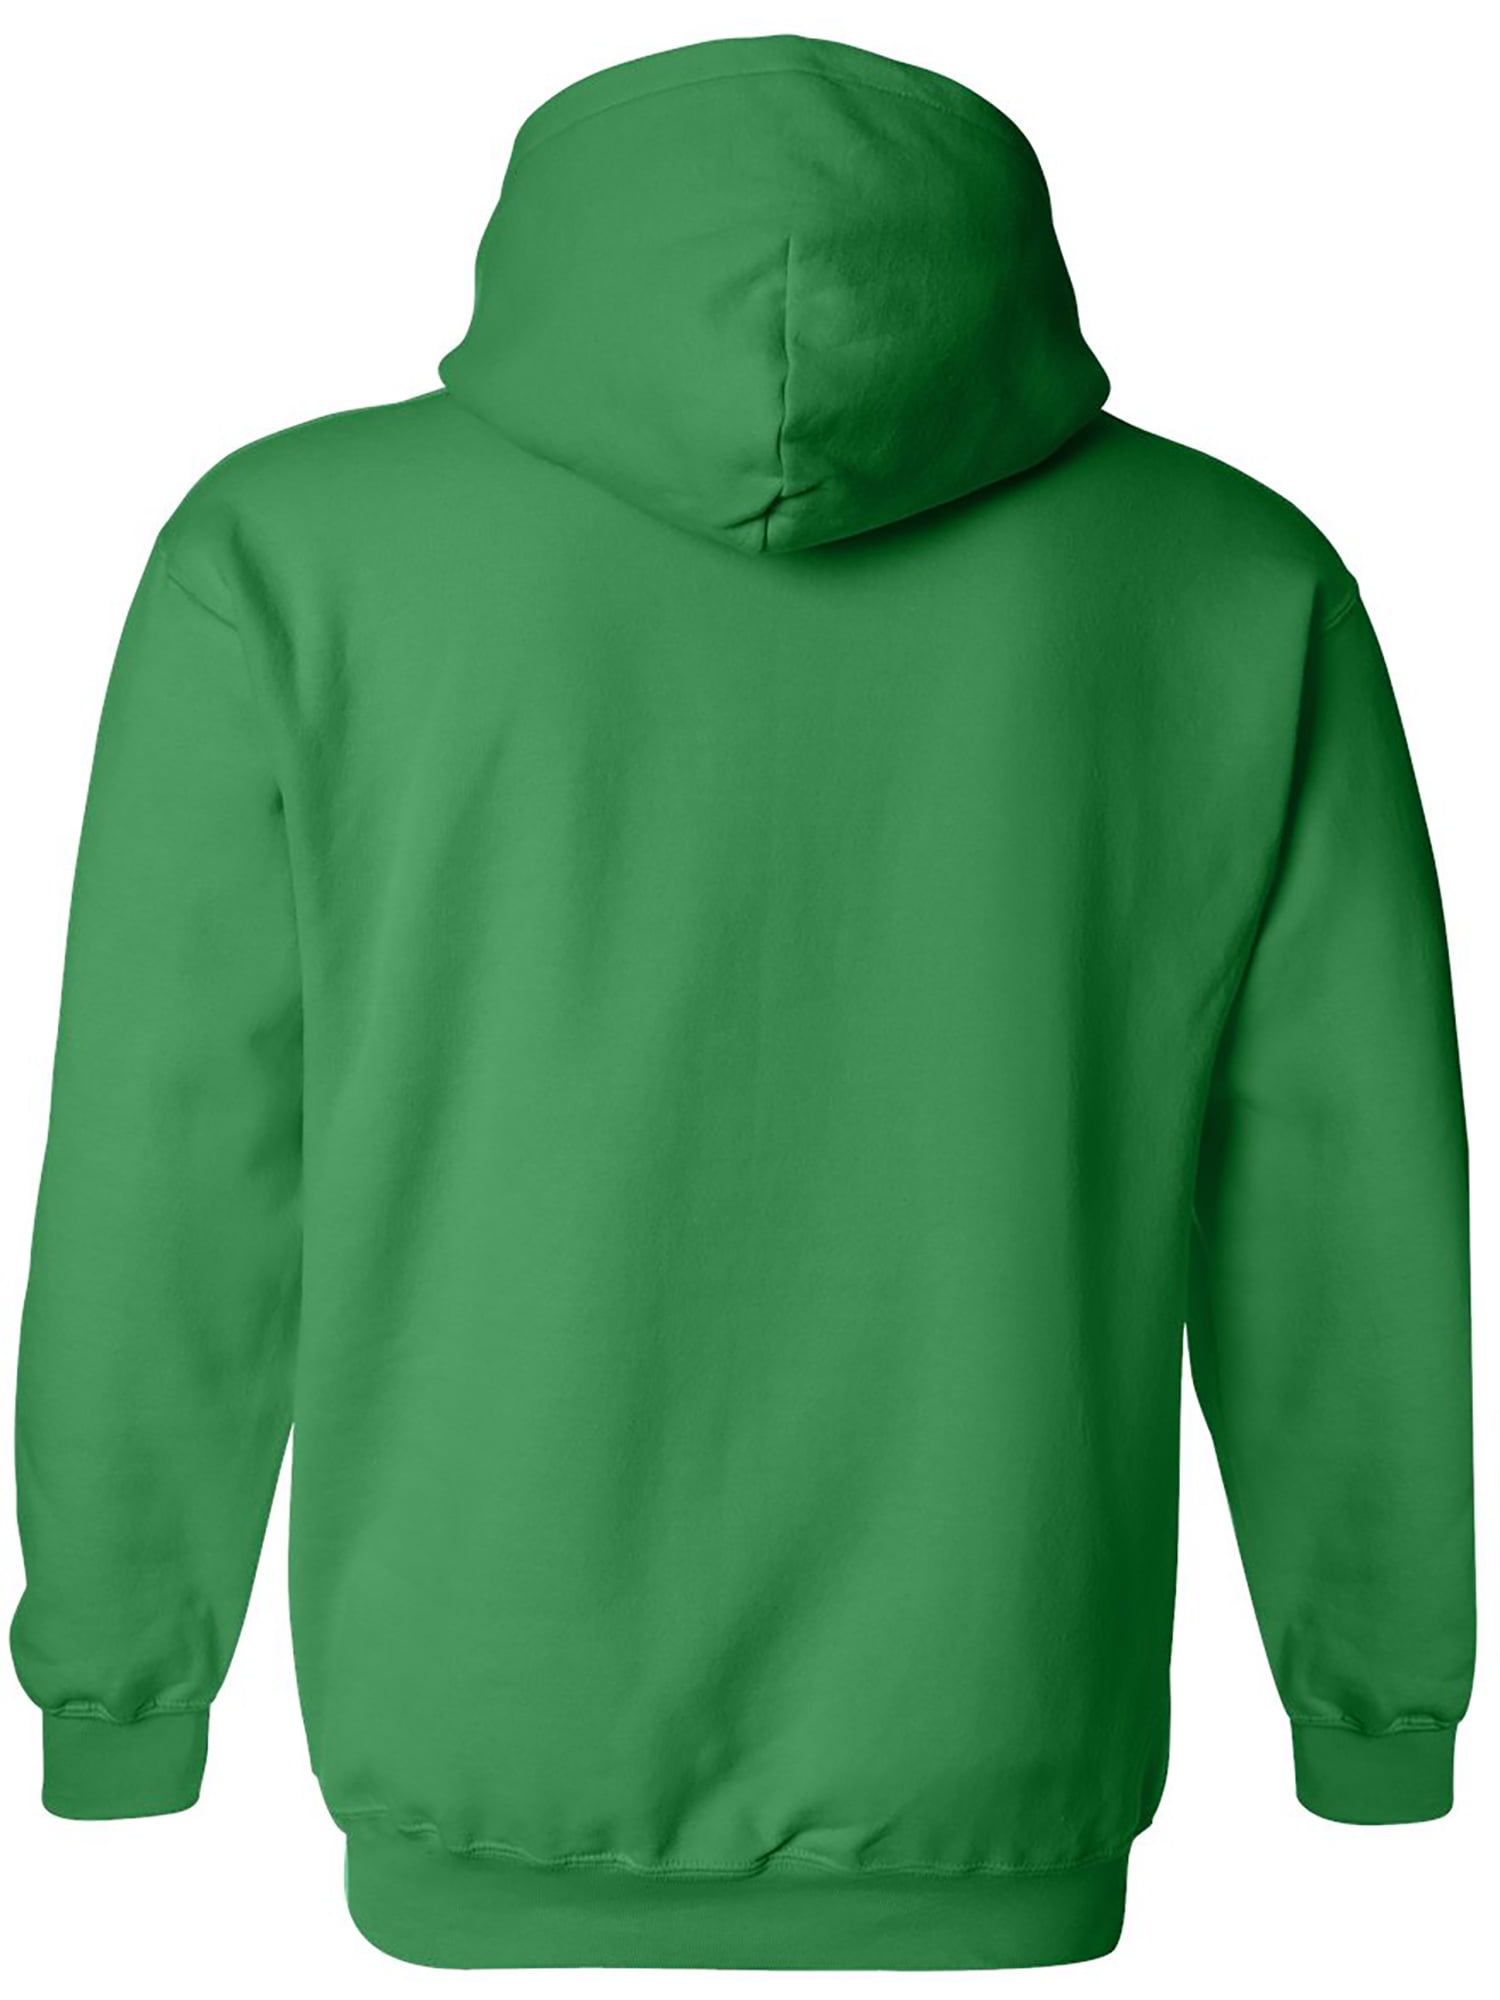 Game Field Adult Hooded Sweatshirt - Walmart.com